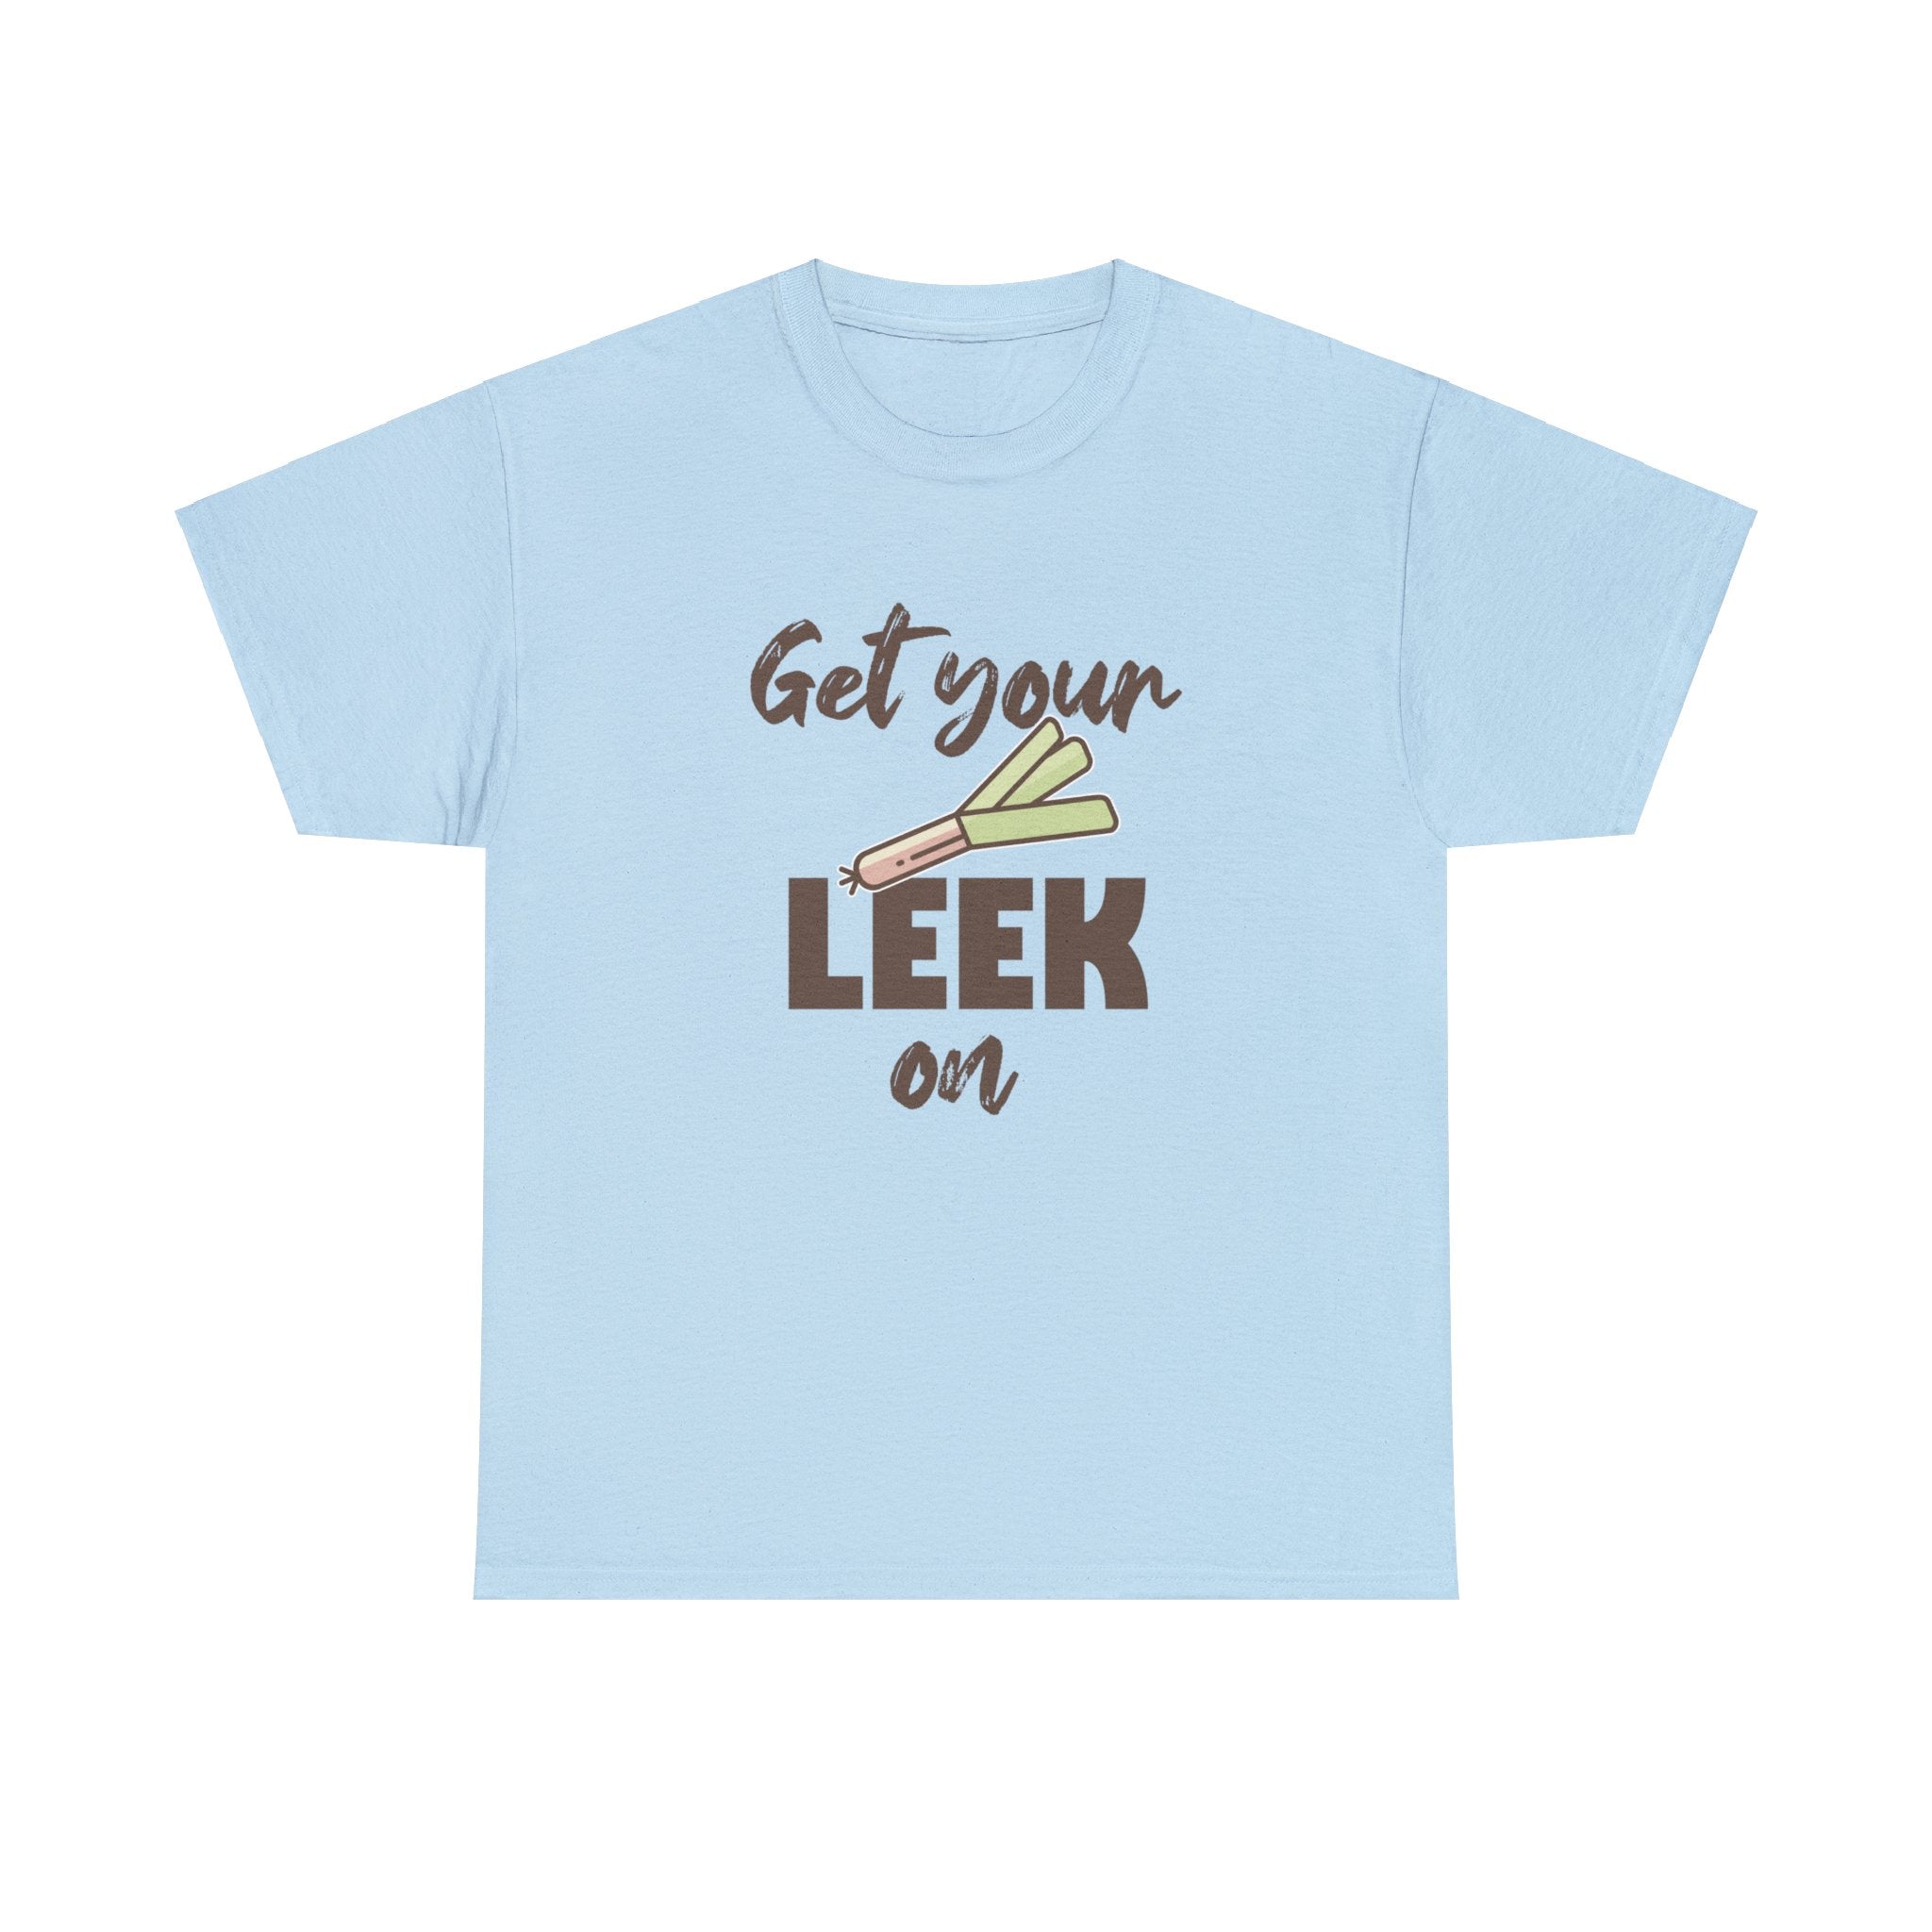 Get your leek on T-shirt